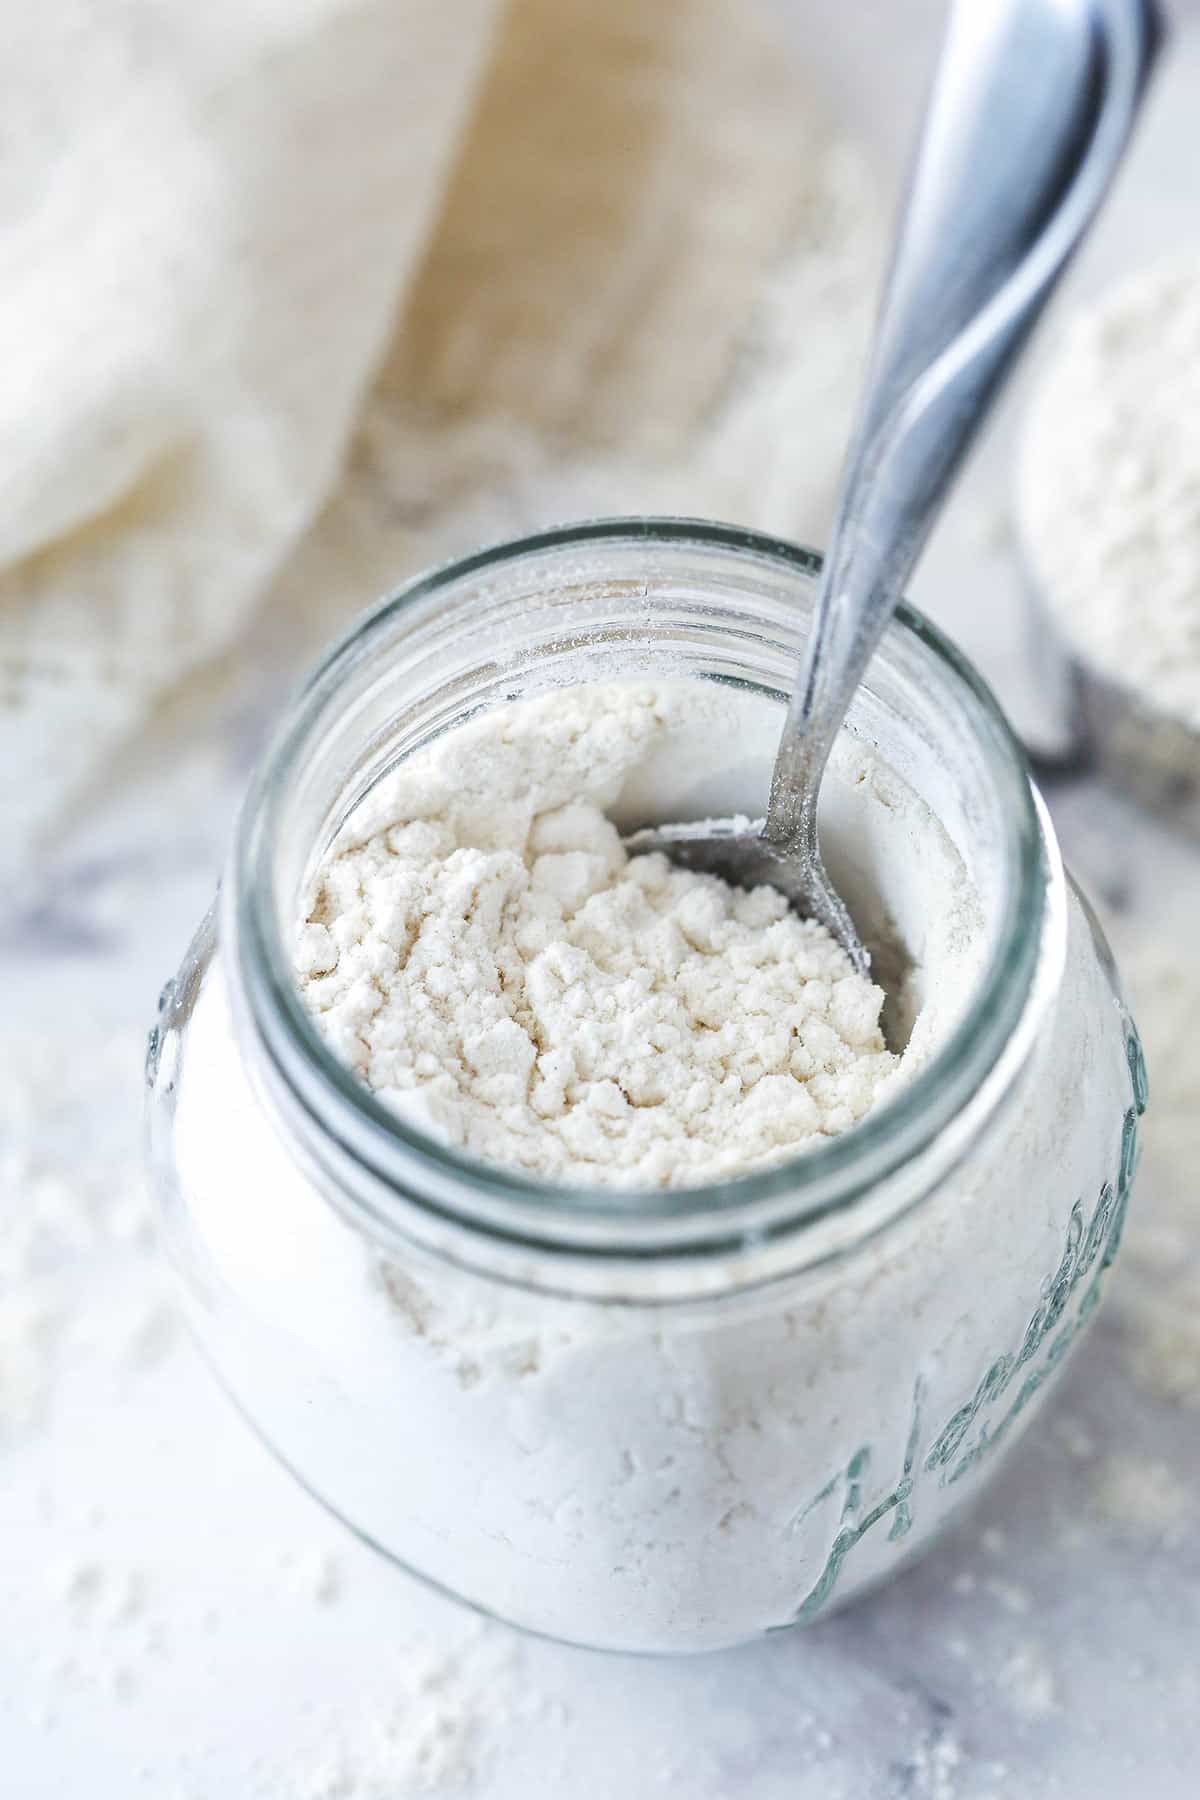 Closeup of a spoon in a jar of heat treated flour.